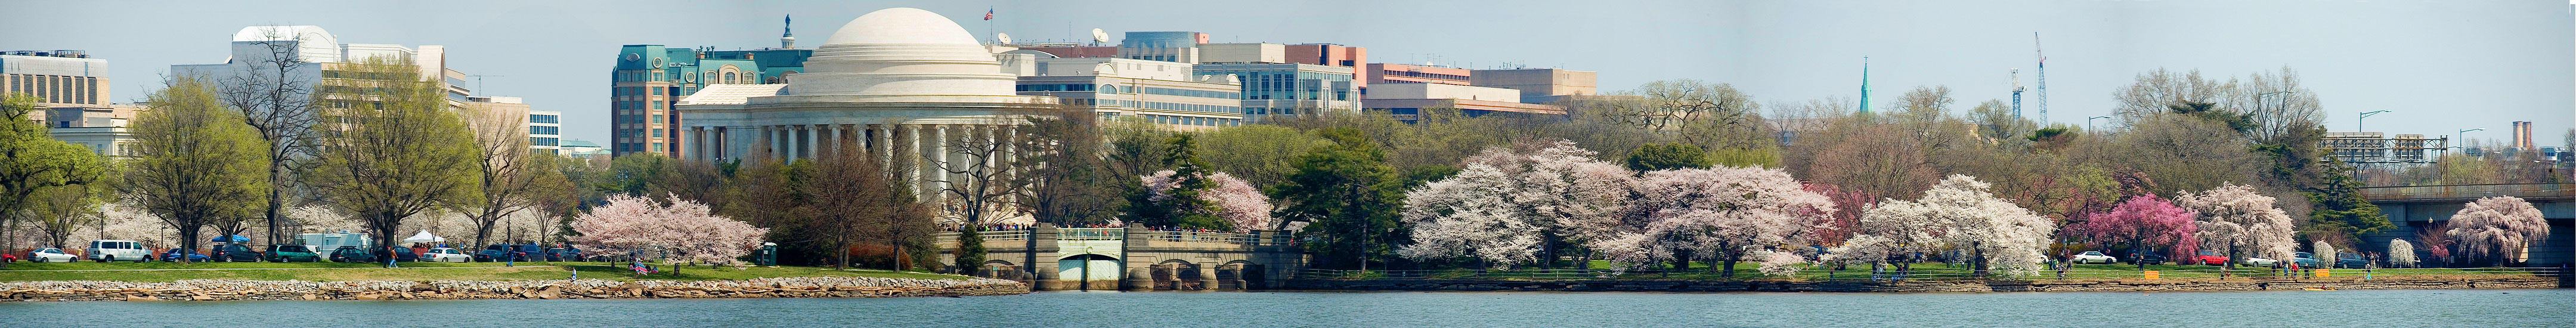 Jefferson Memorial in the cherry blossoms